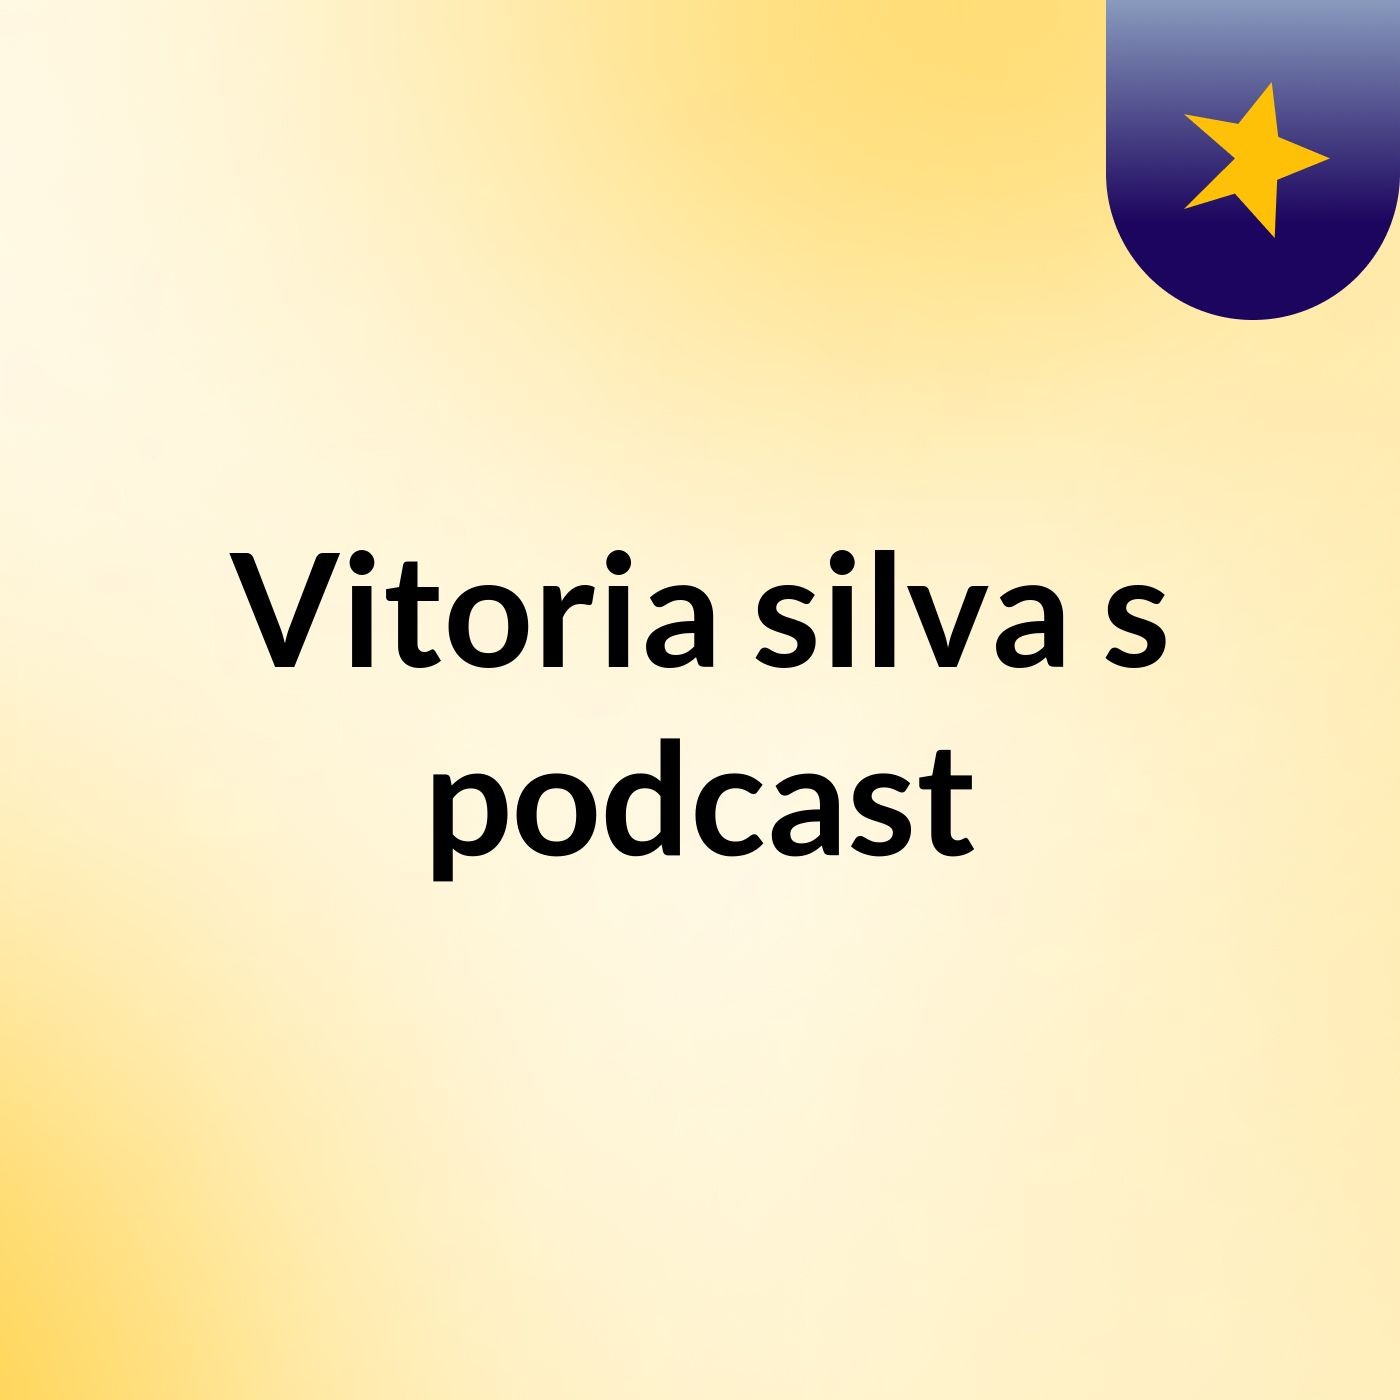 Vitoria silva's podcast